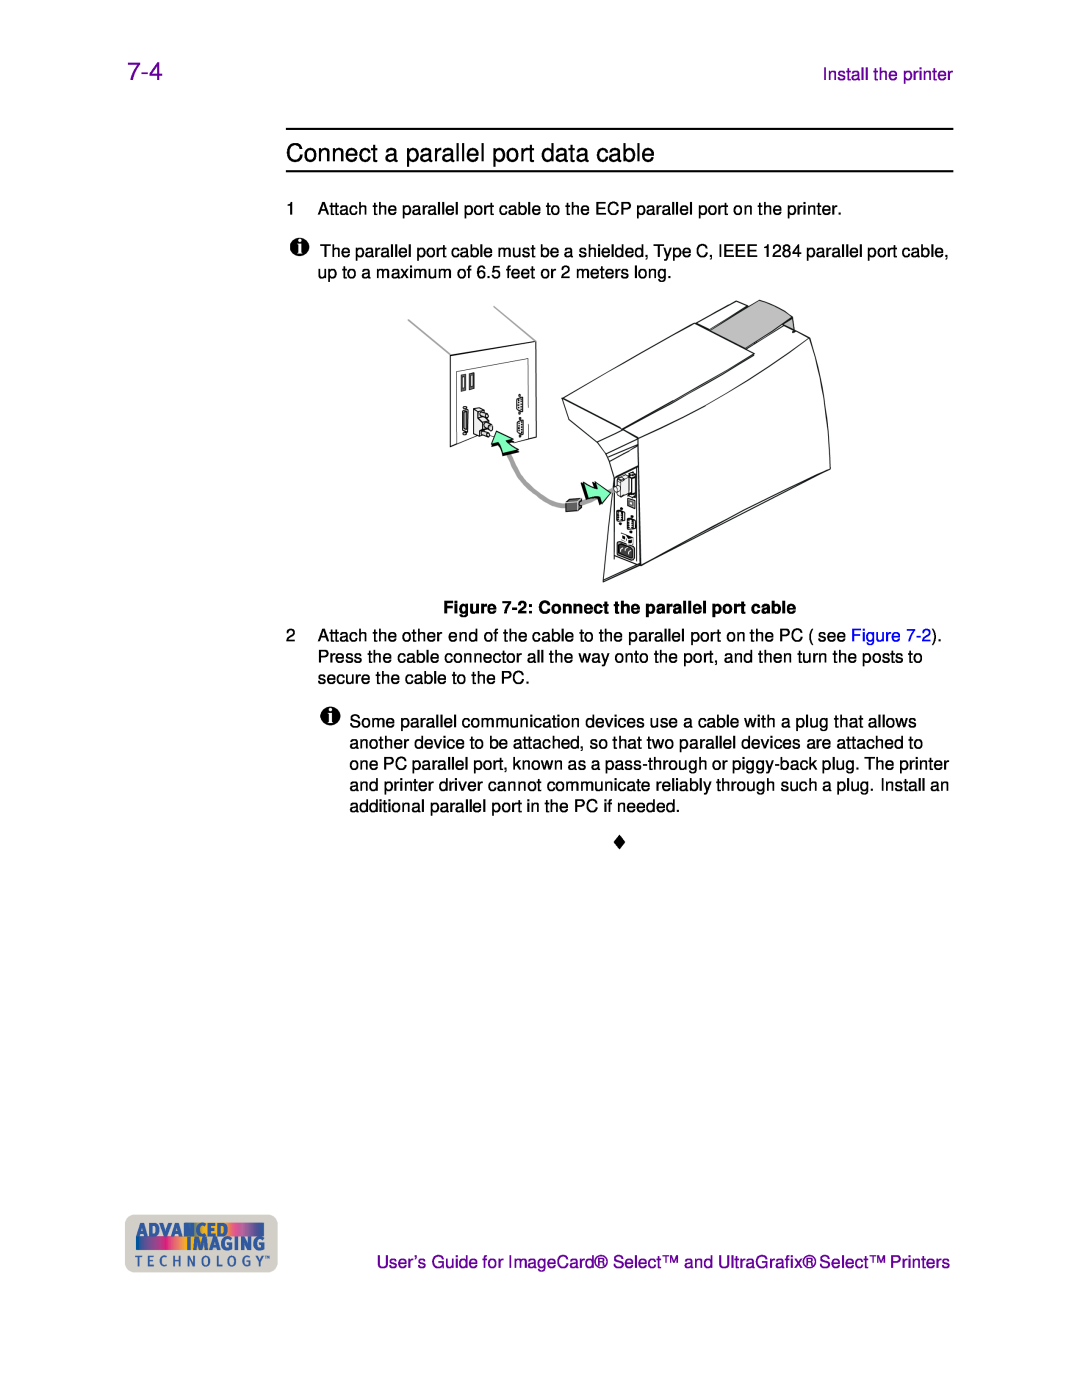 Datacard Group ImageCard SelectTM and UltraGrafix SelectTM Printers manual Connect a parallel port data cable 